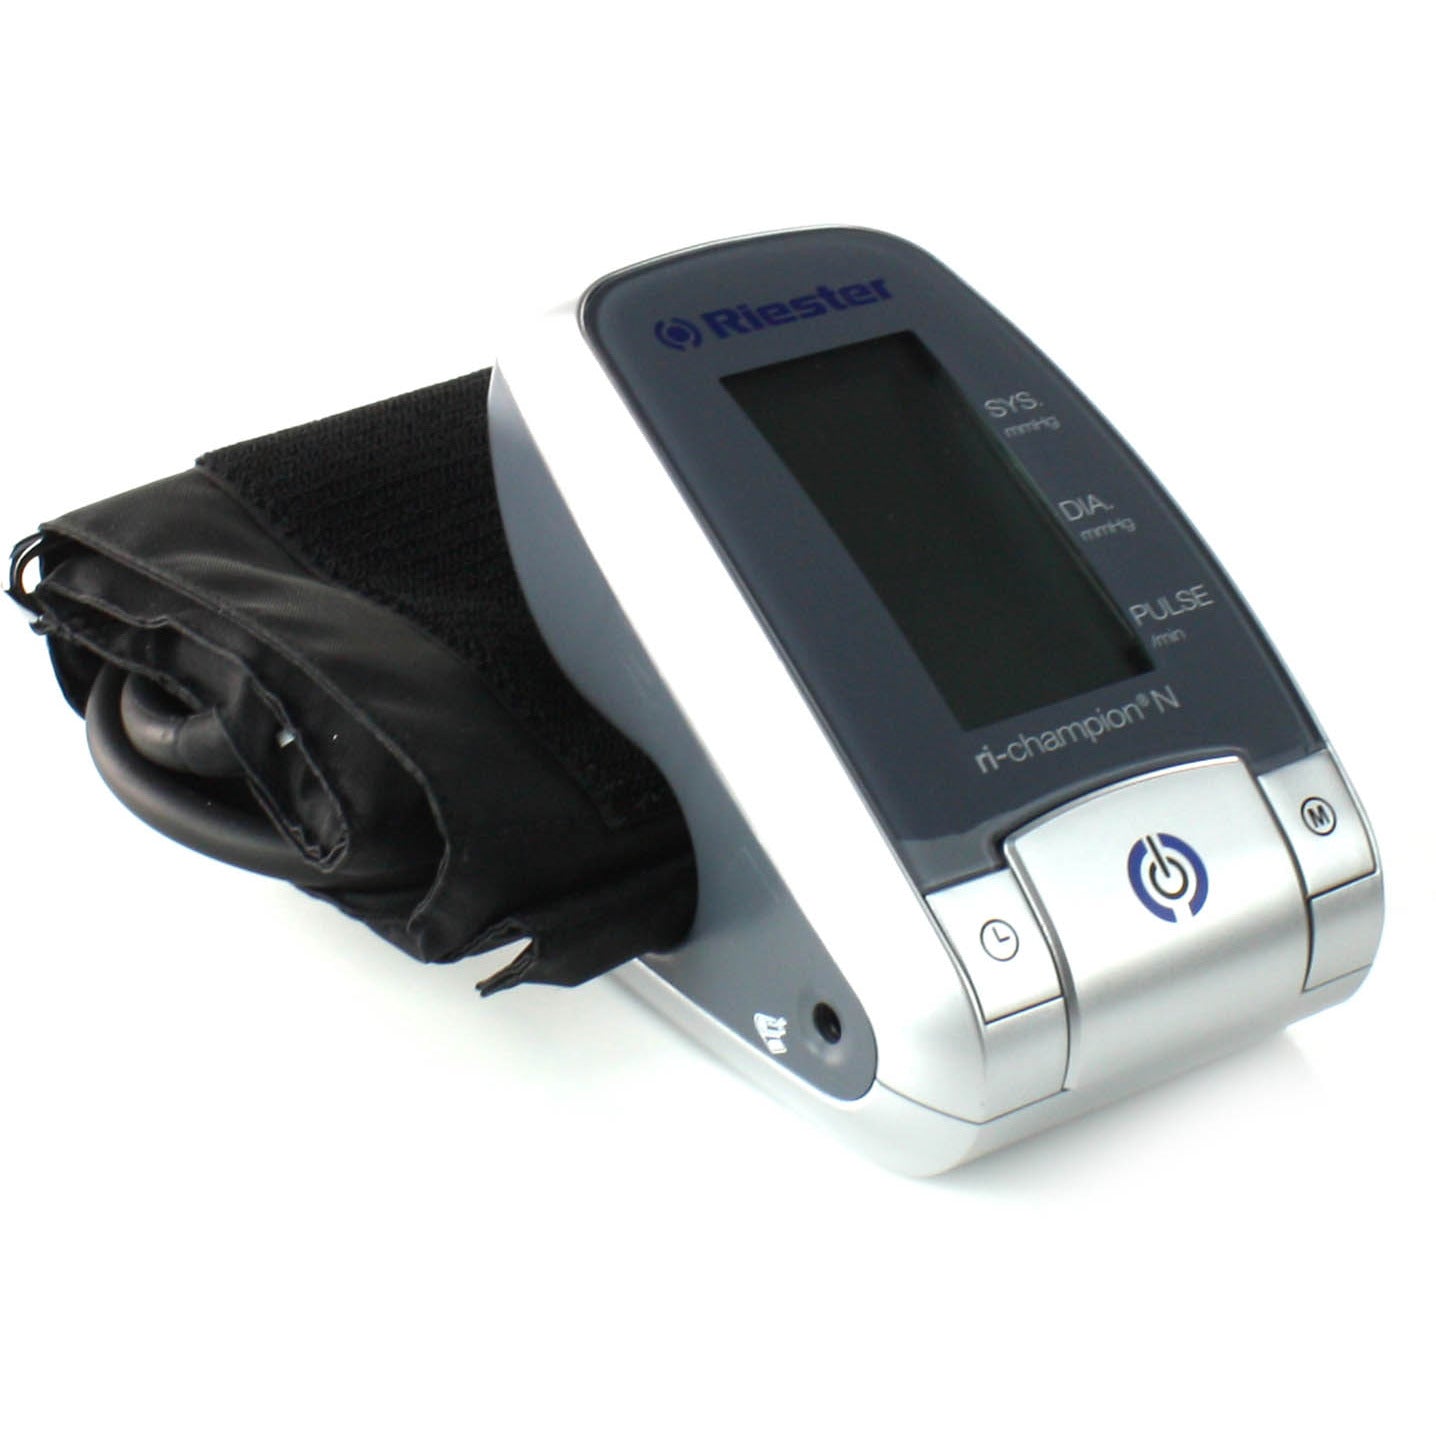 Riester Ri-Champion N Digital Blood Pressure Monitor with Obese Cuff